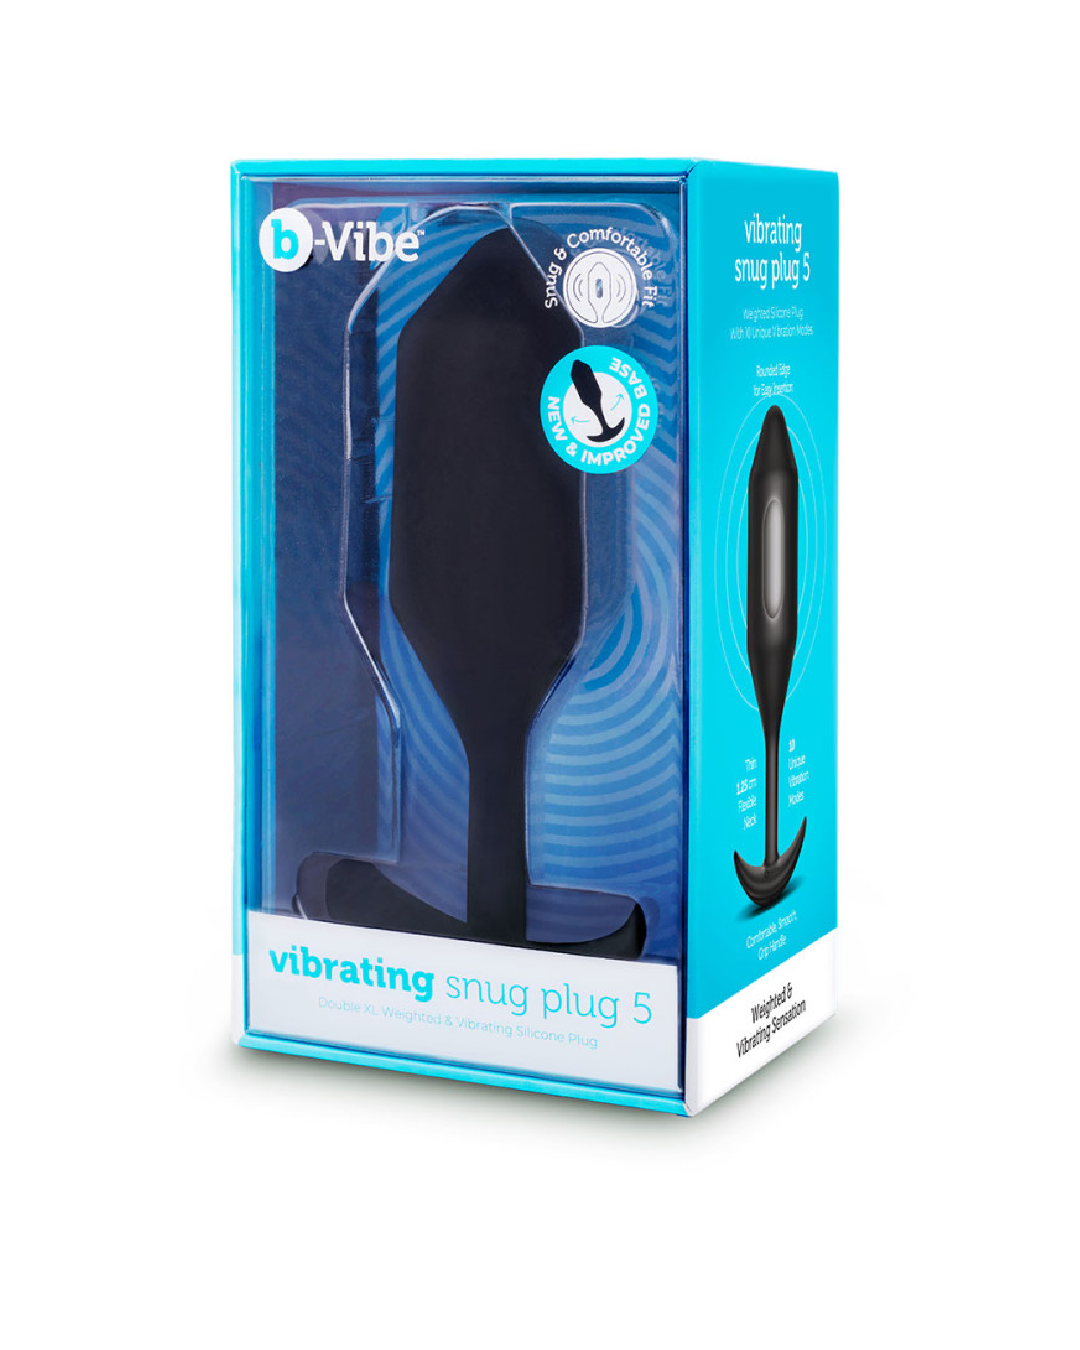 B-Vibe Vibrating Snug Plug 5 (XXL) - Black in the box